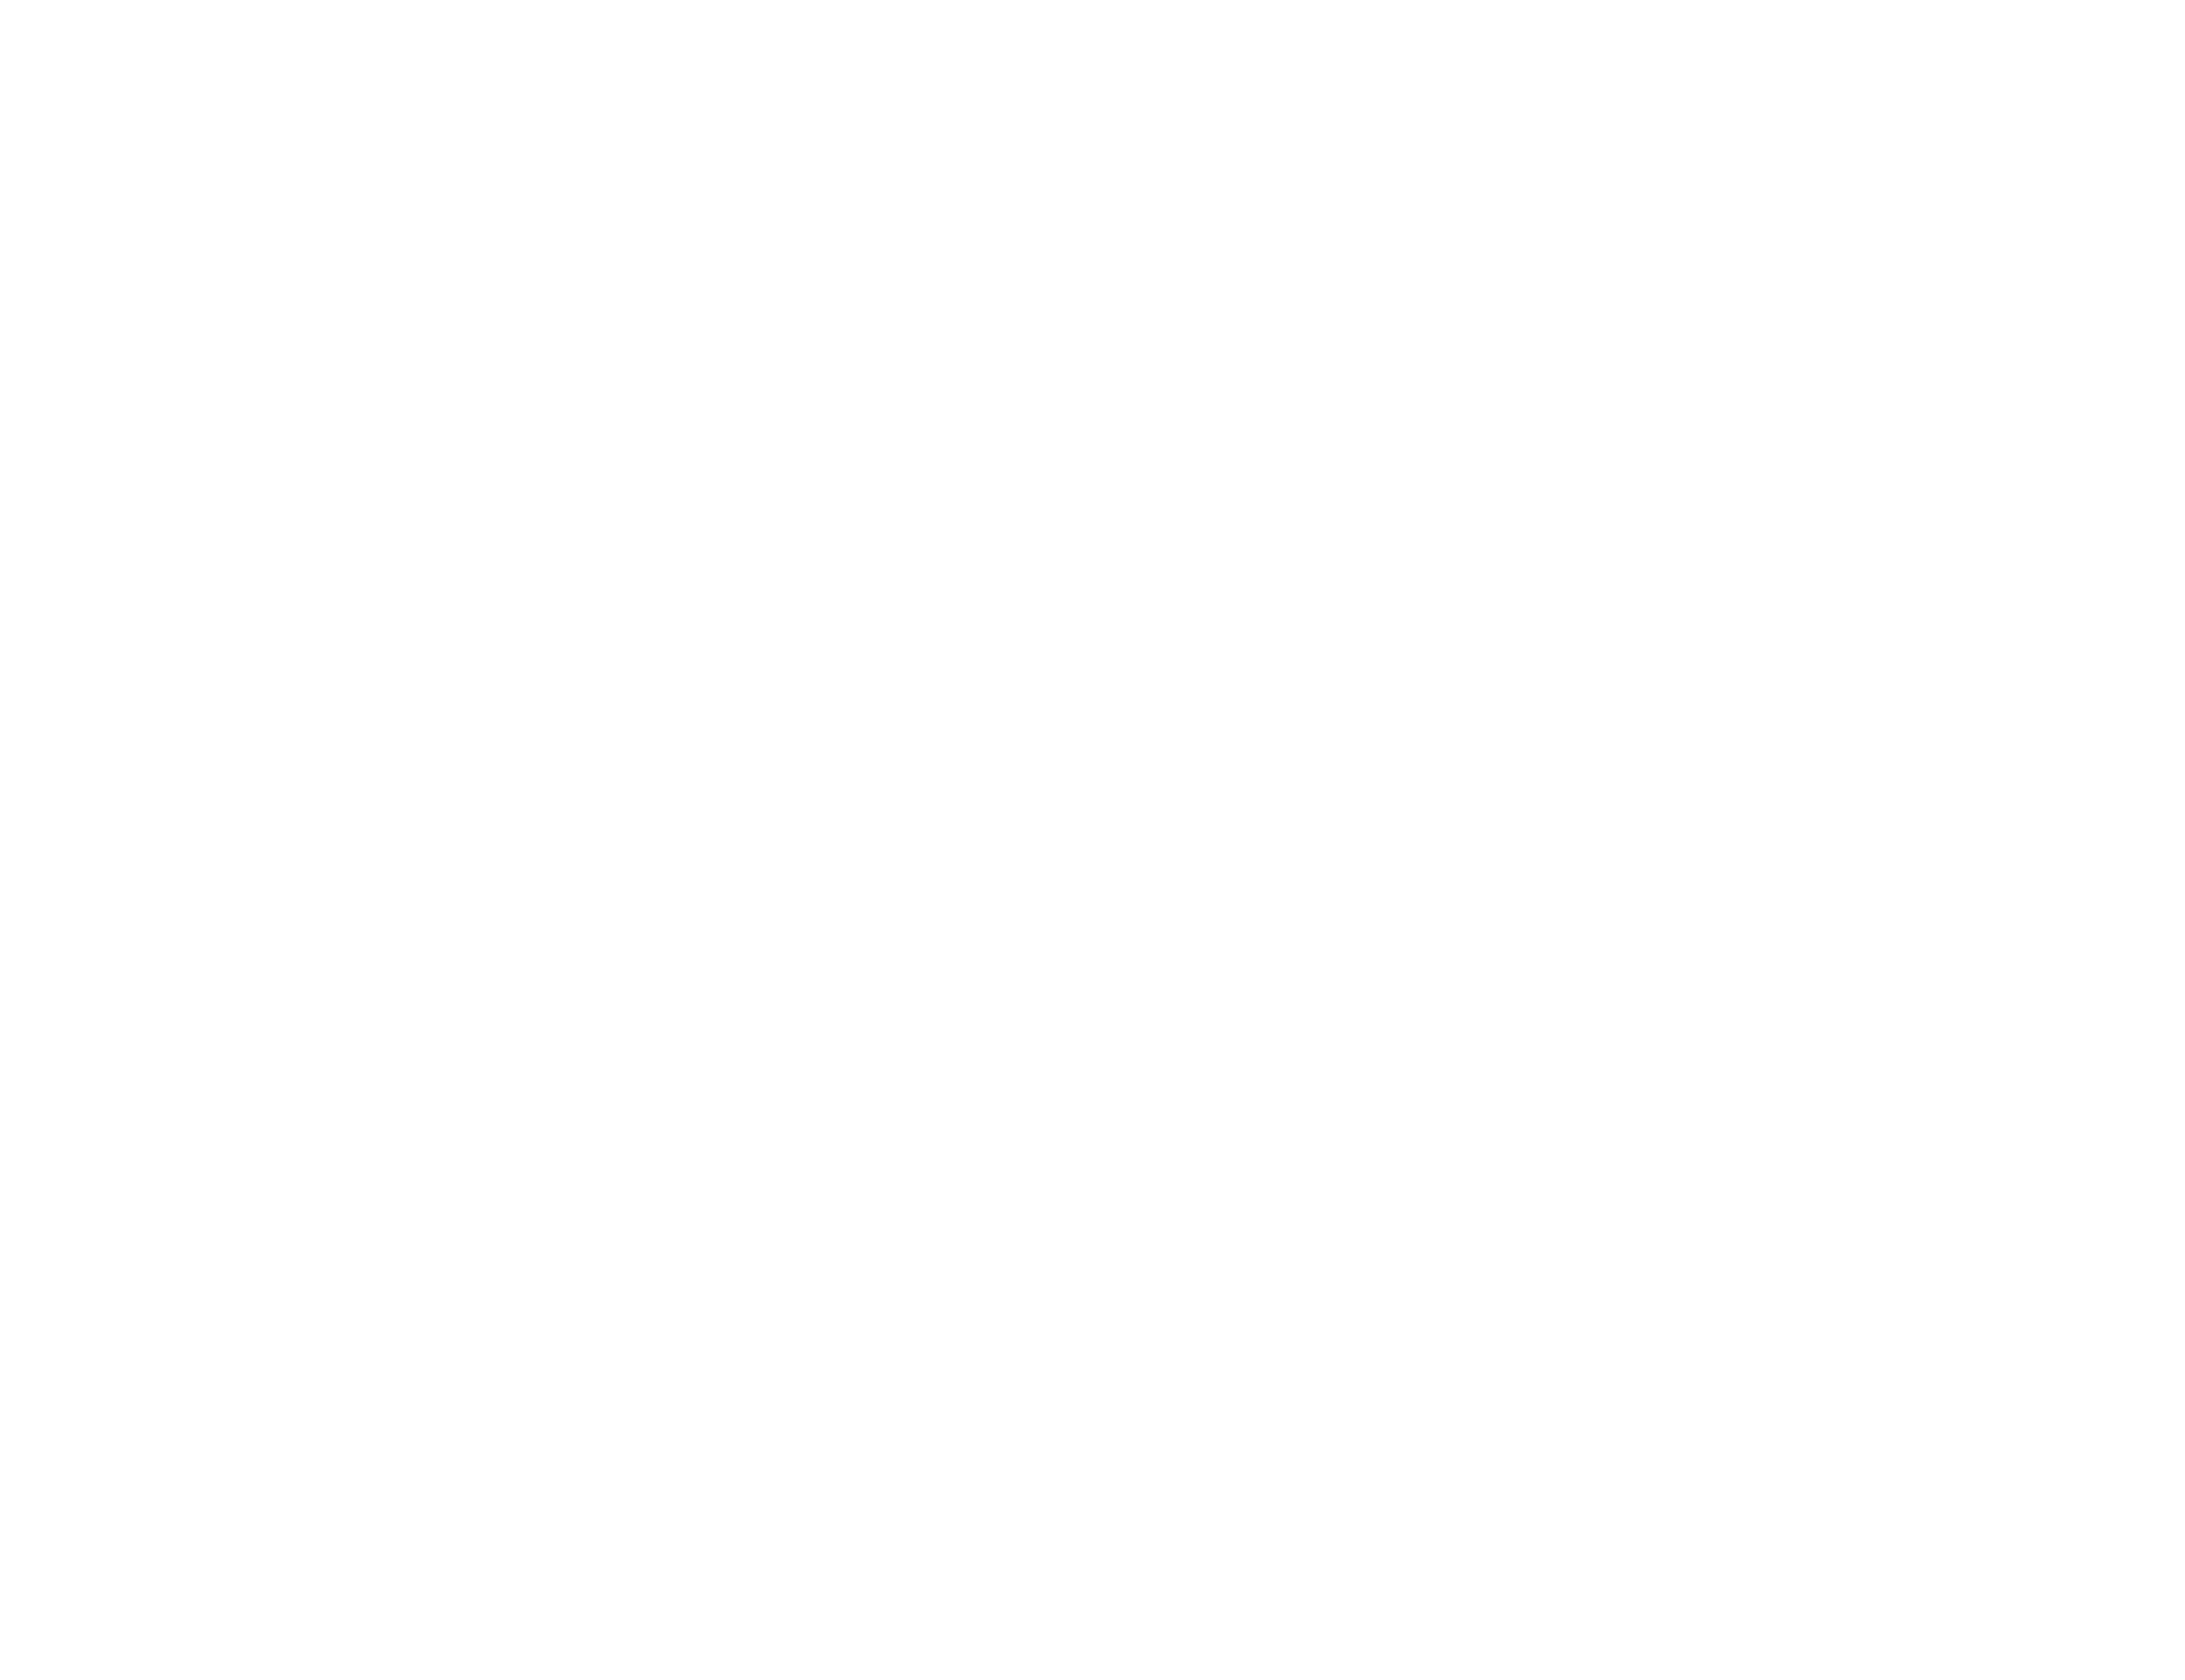 Pinky's Valet